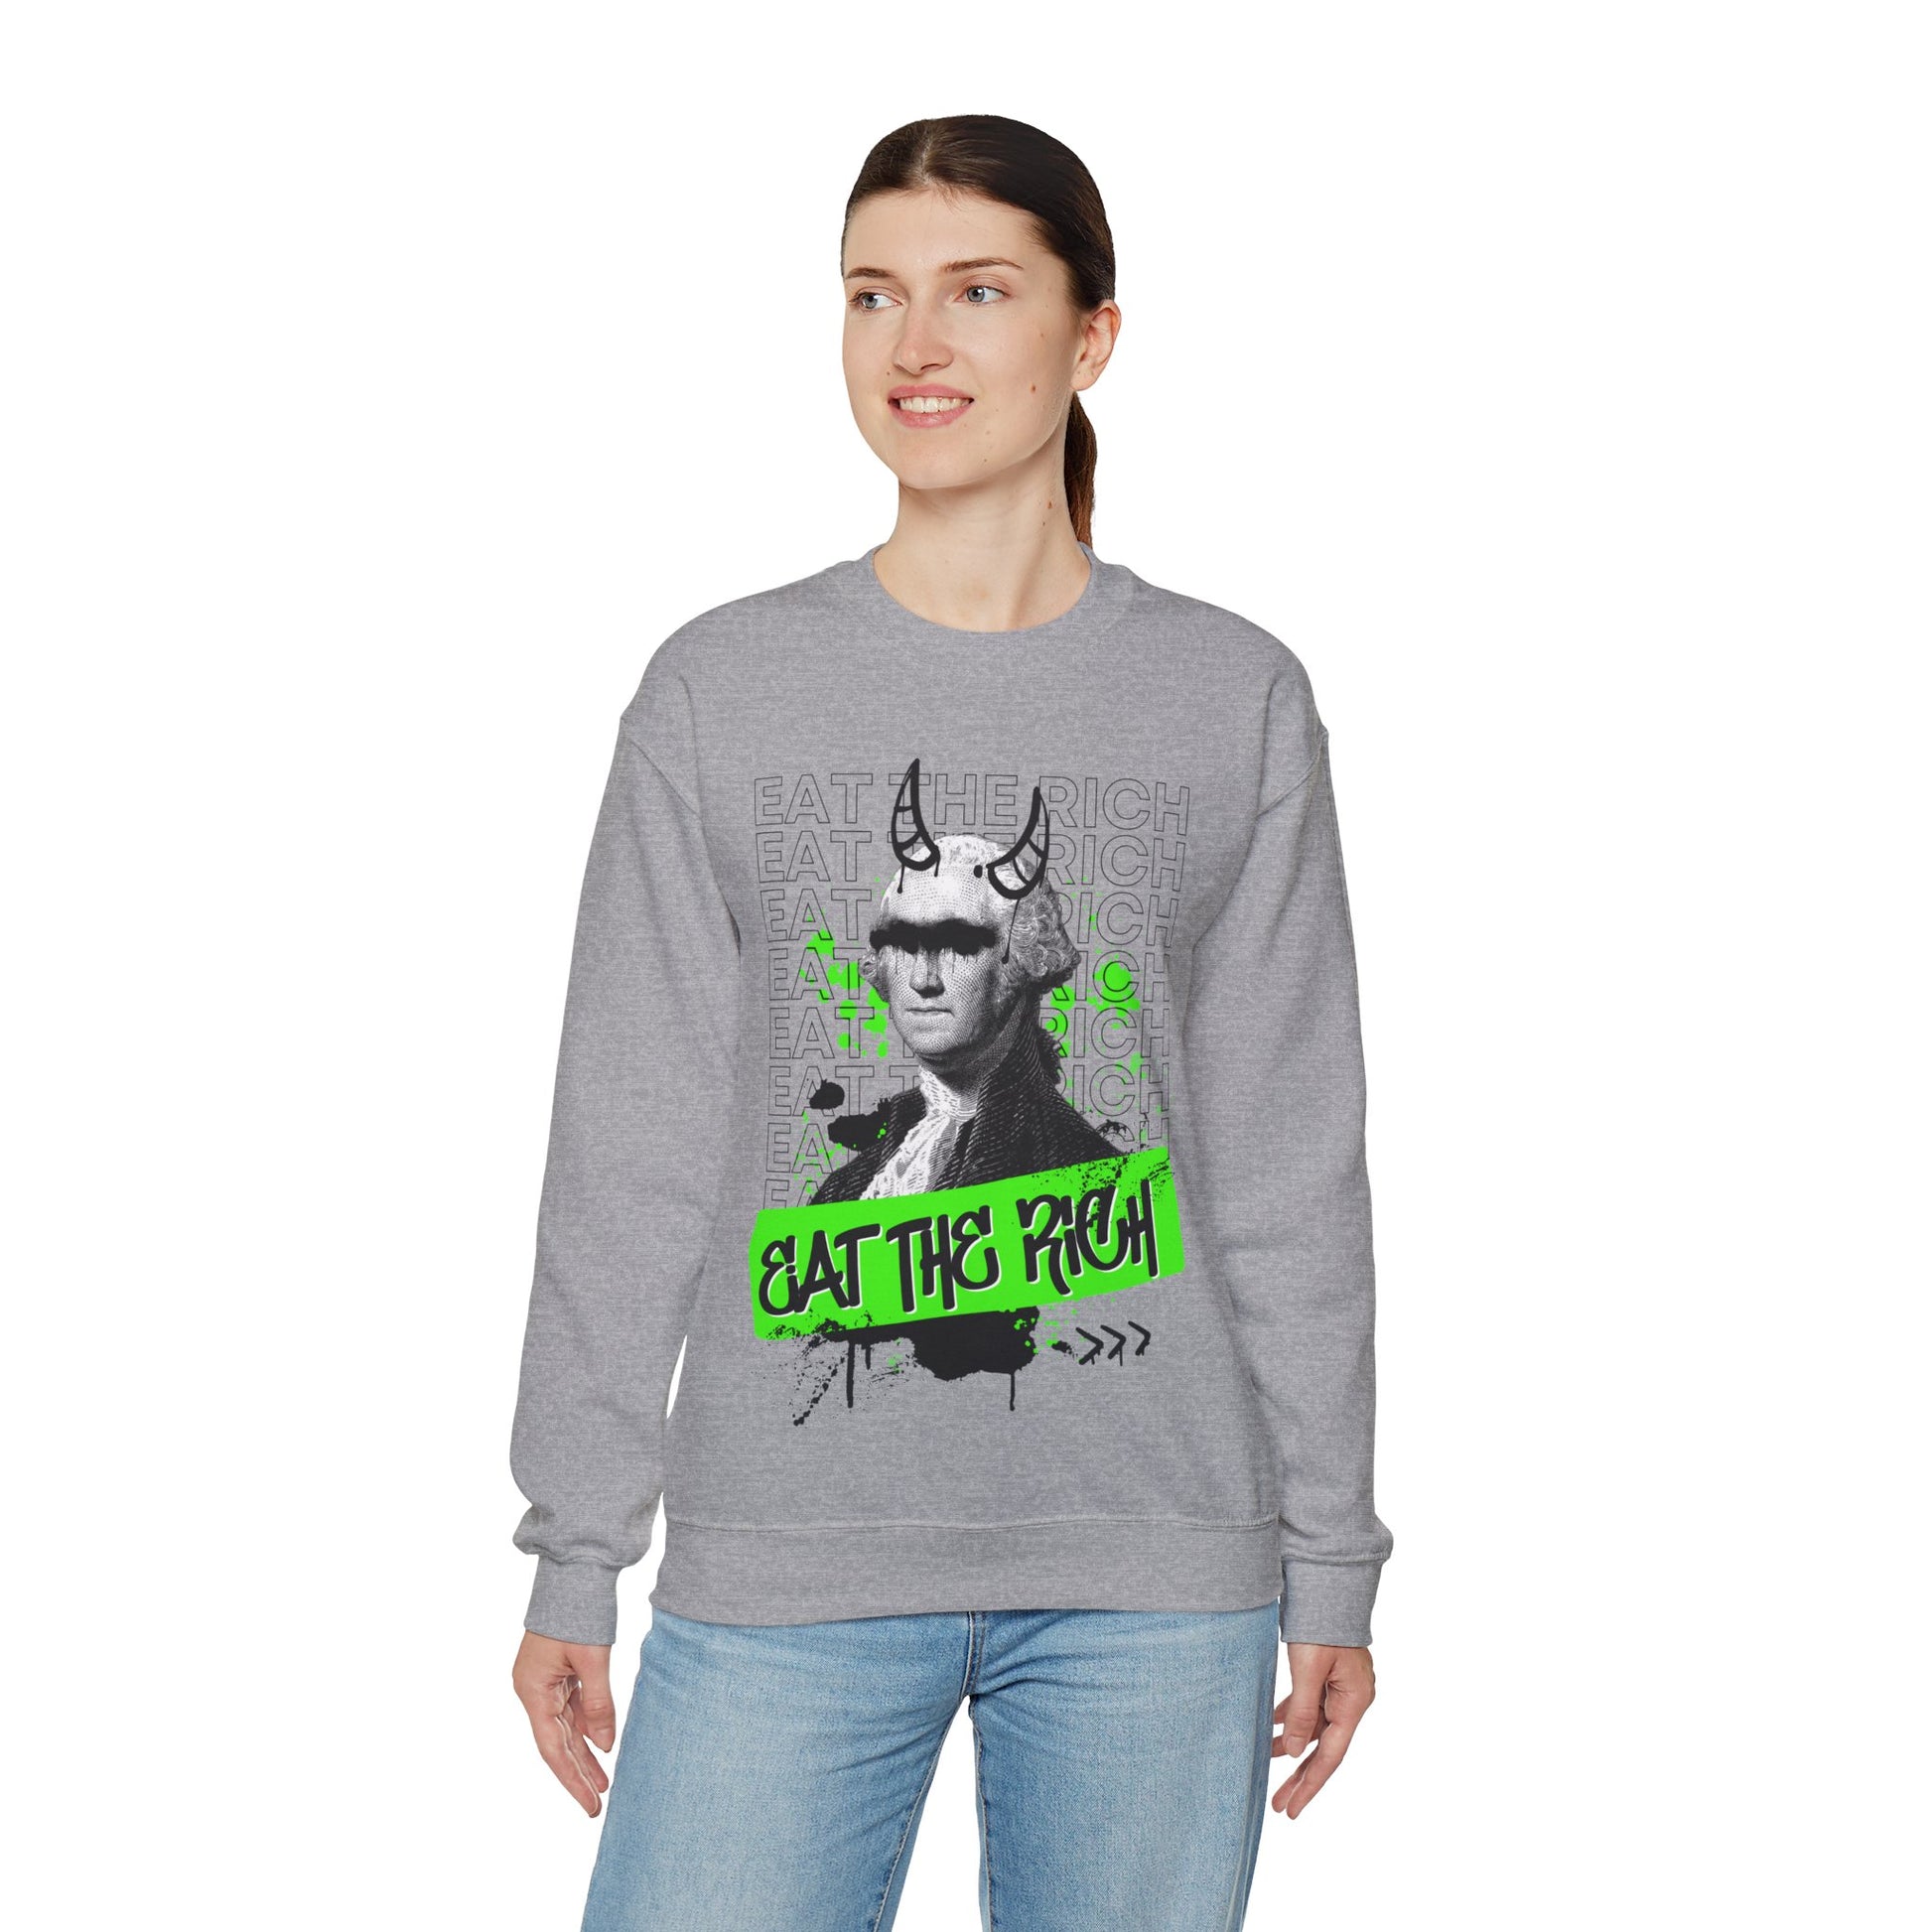 Eat the Rich Graffiti Sweatshirt